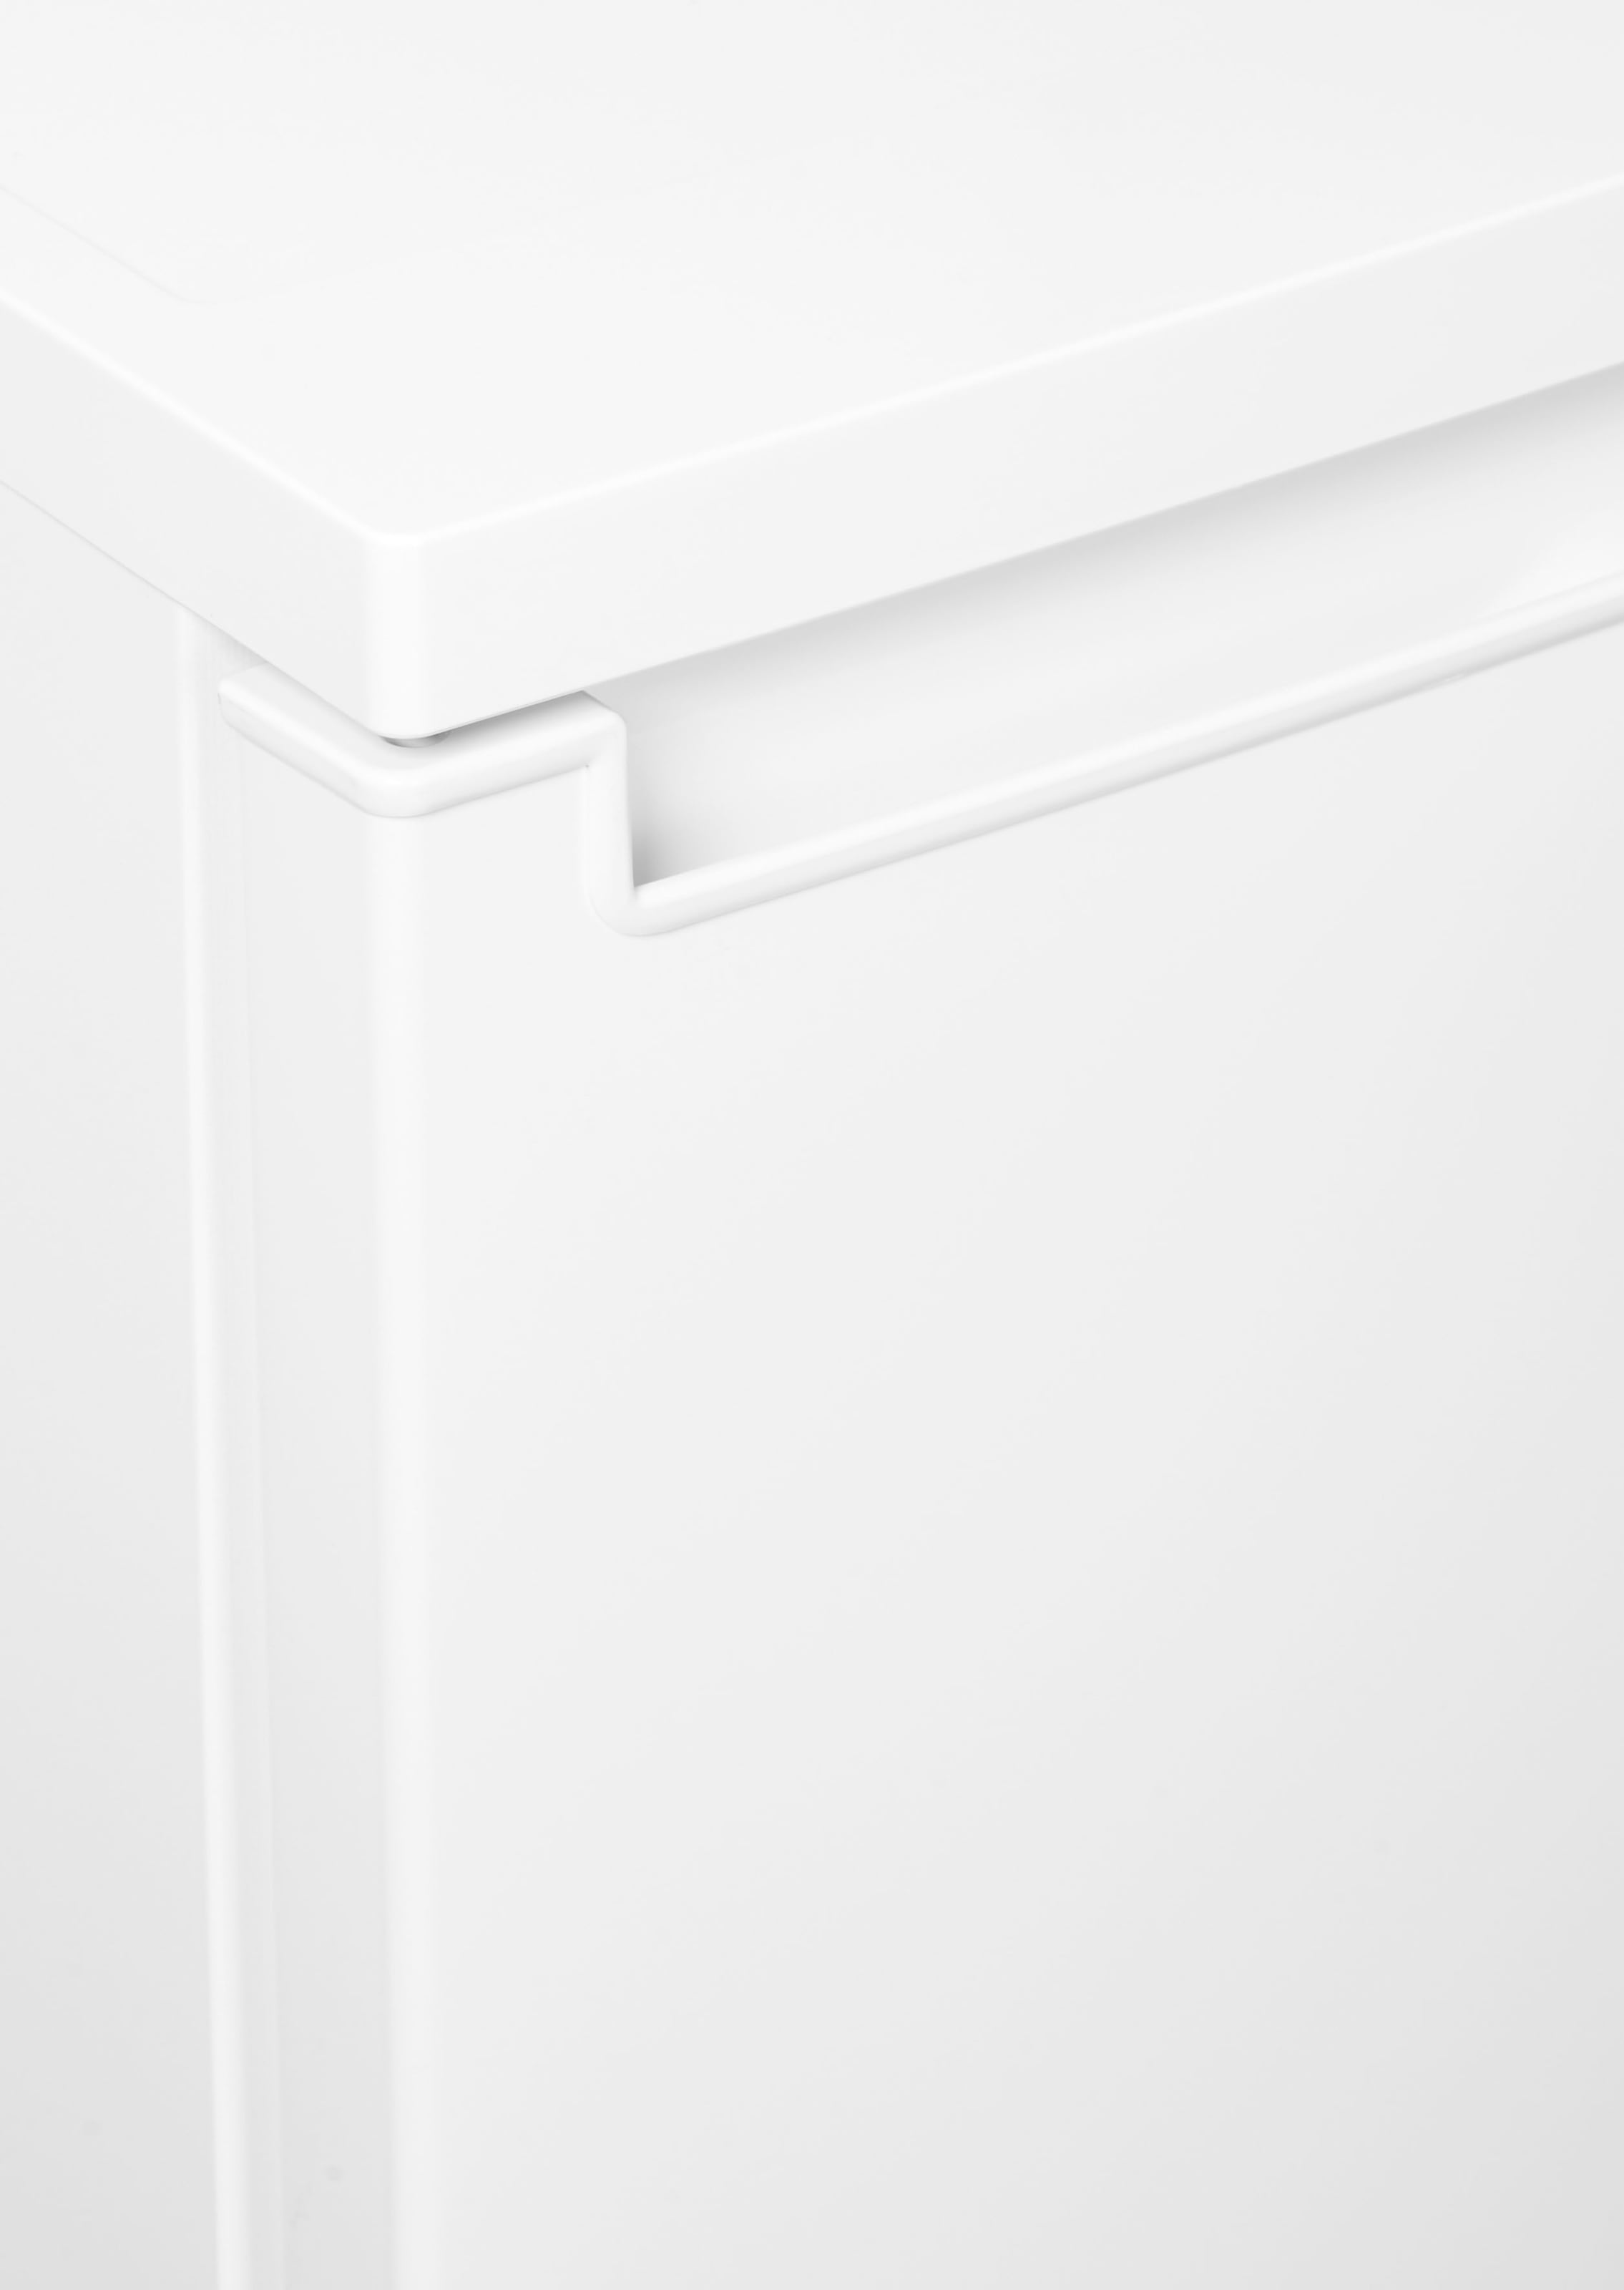 BOSCH Table Top Kühlschrank BAUR | kaufen cm 85 hoch, breit cm online 56 KTR15NWEA, »KTR15NWEA«